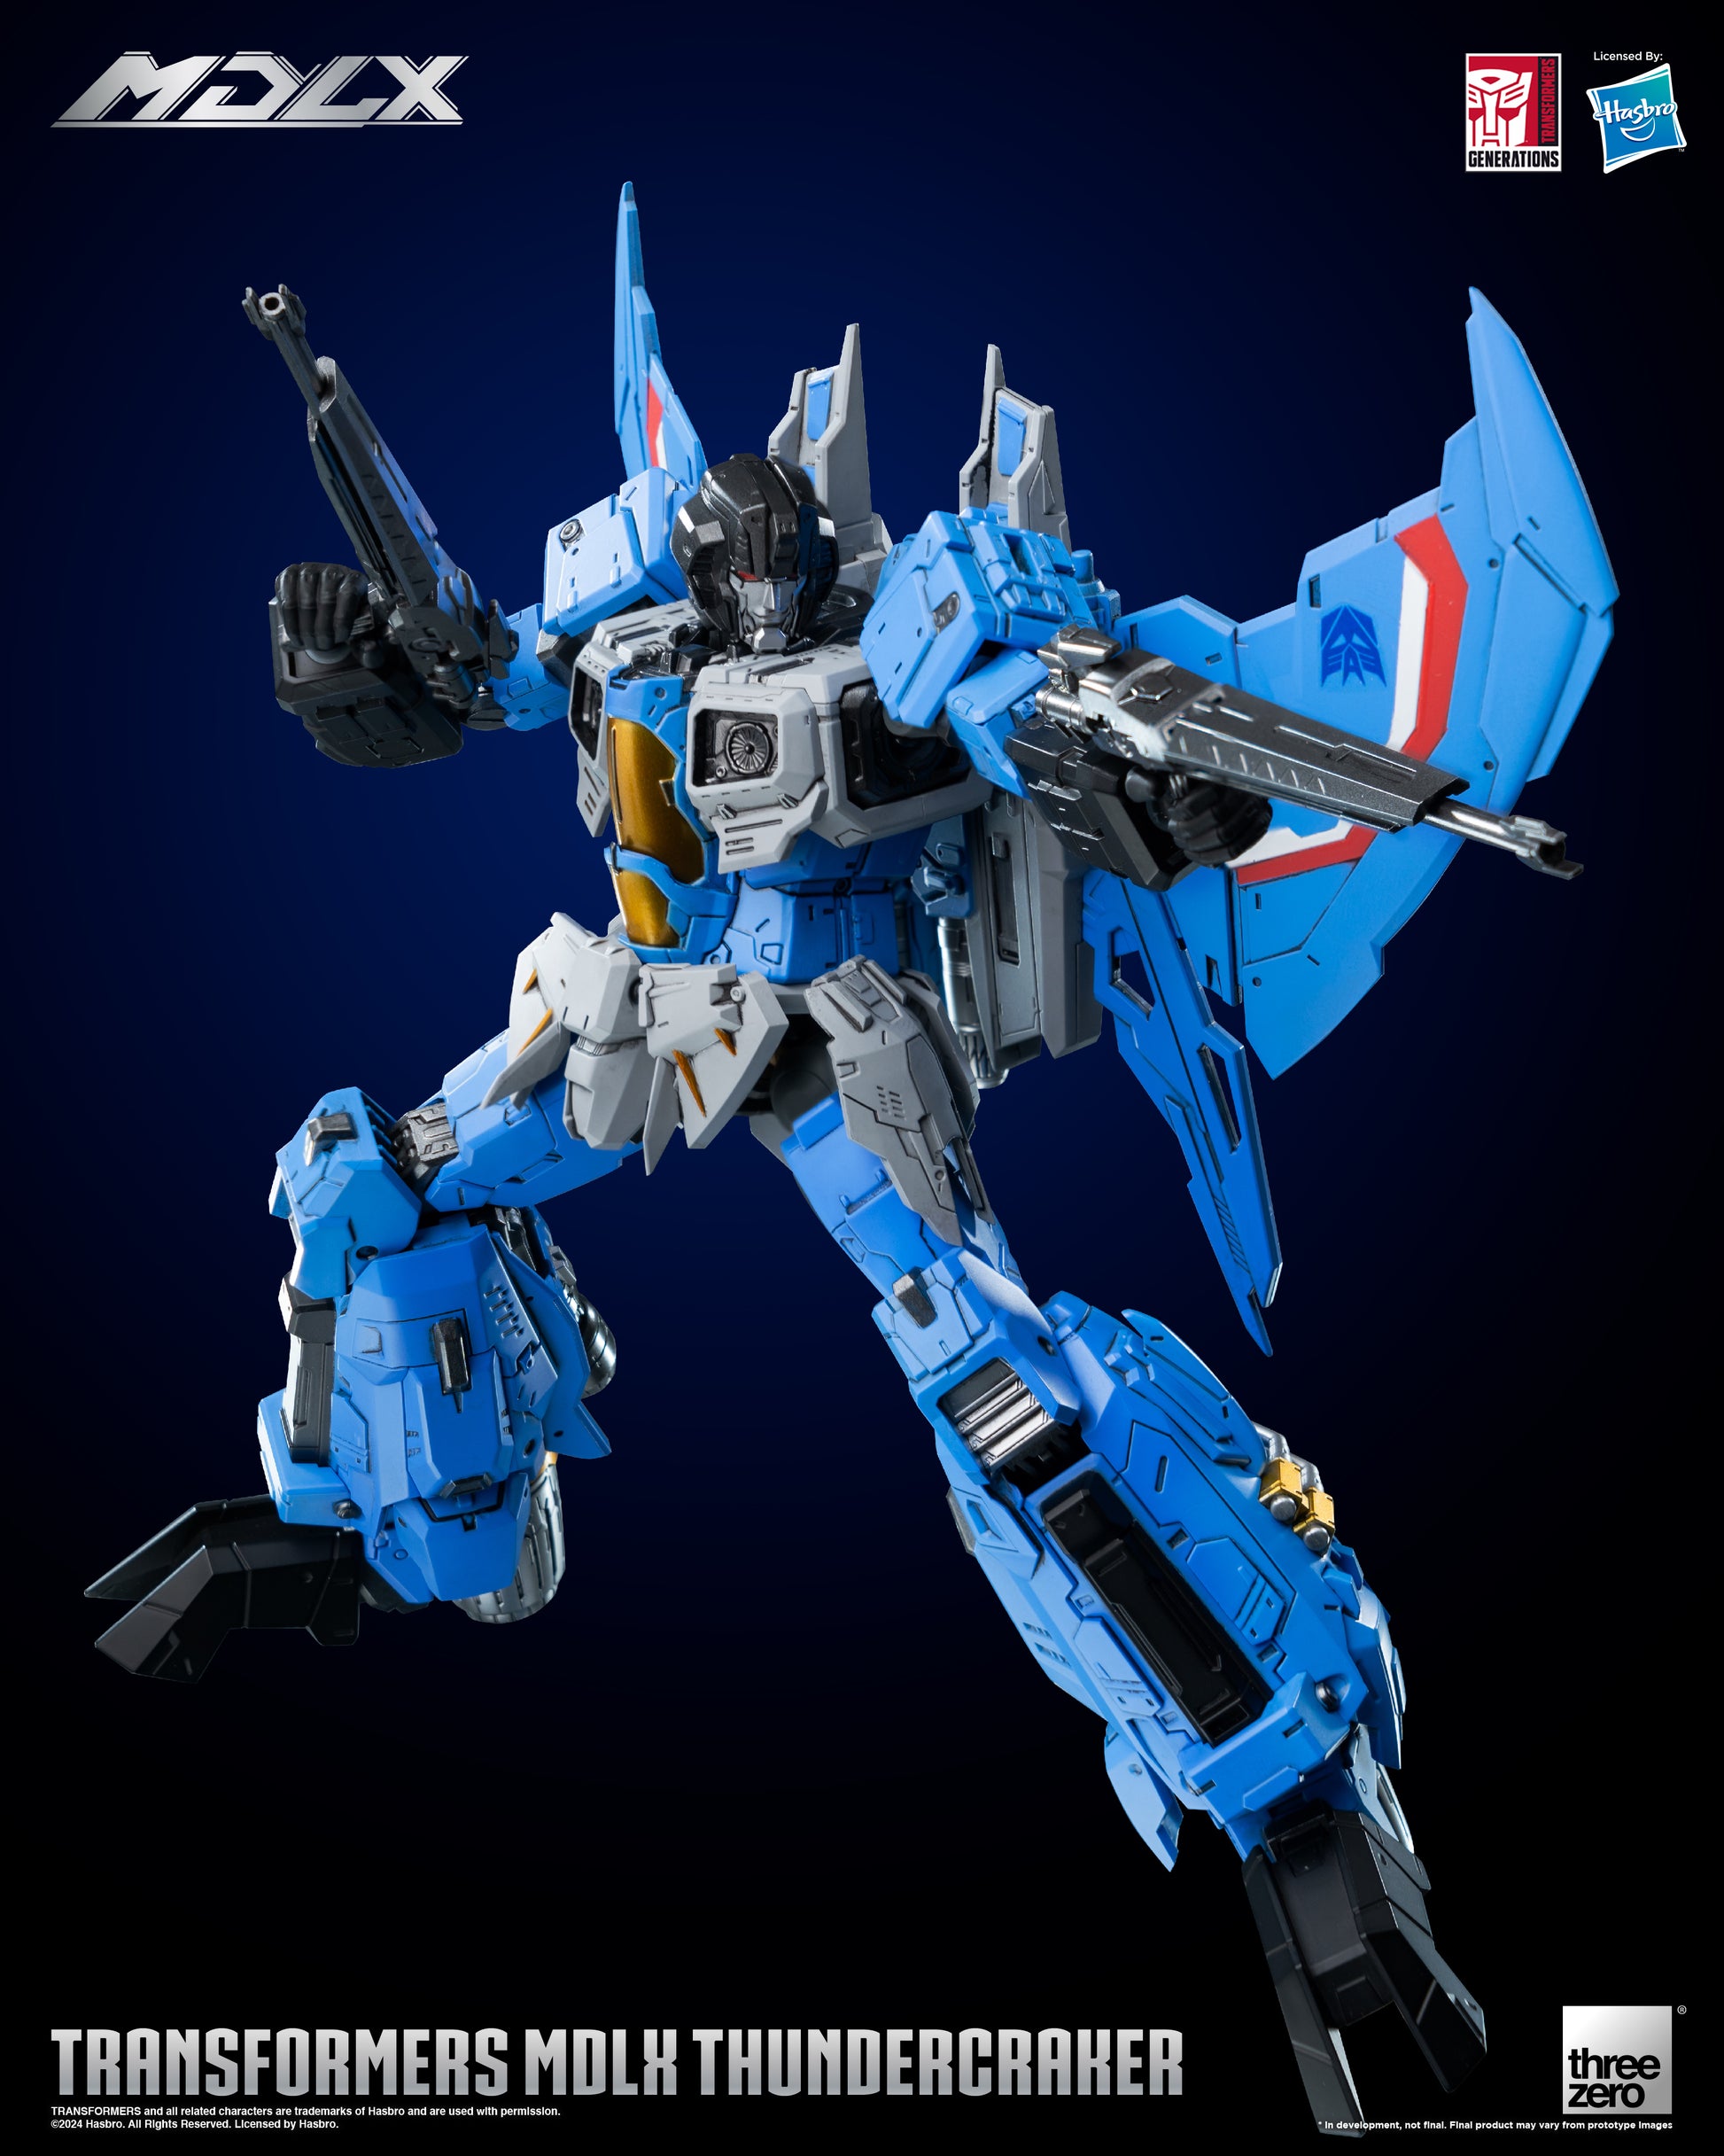 Transformers MDLX Articulated Figure Series Thundercracker one gun point front